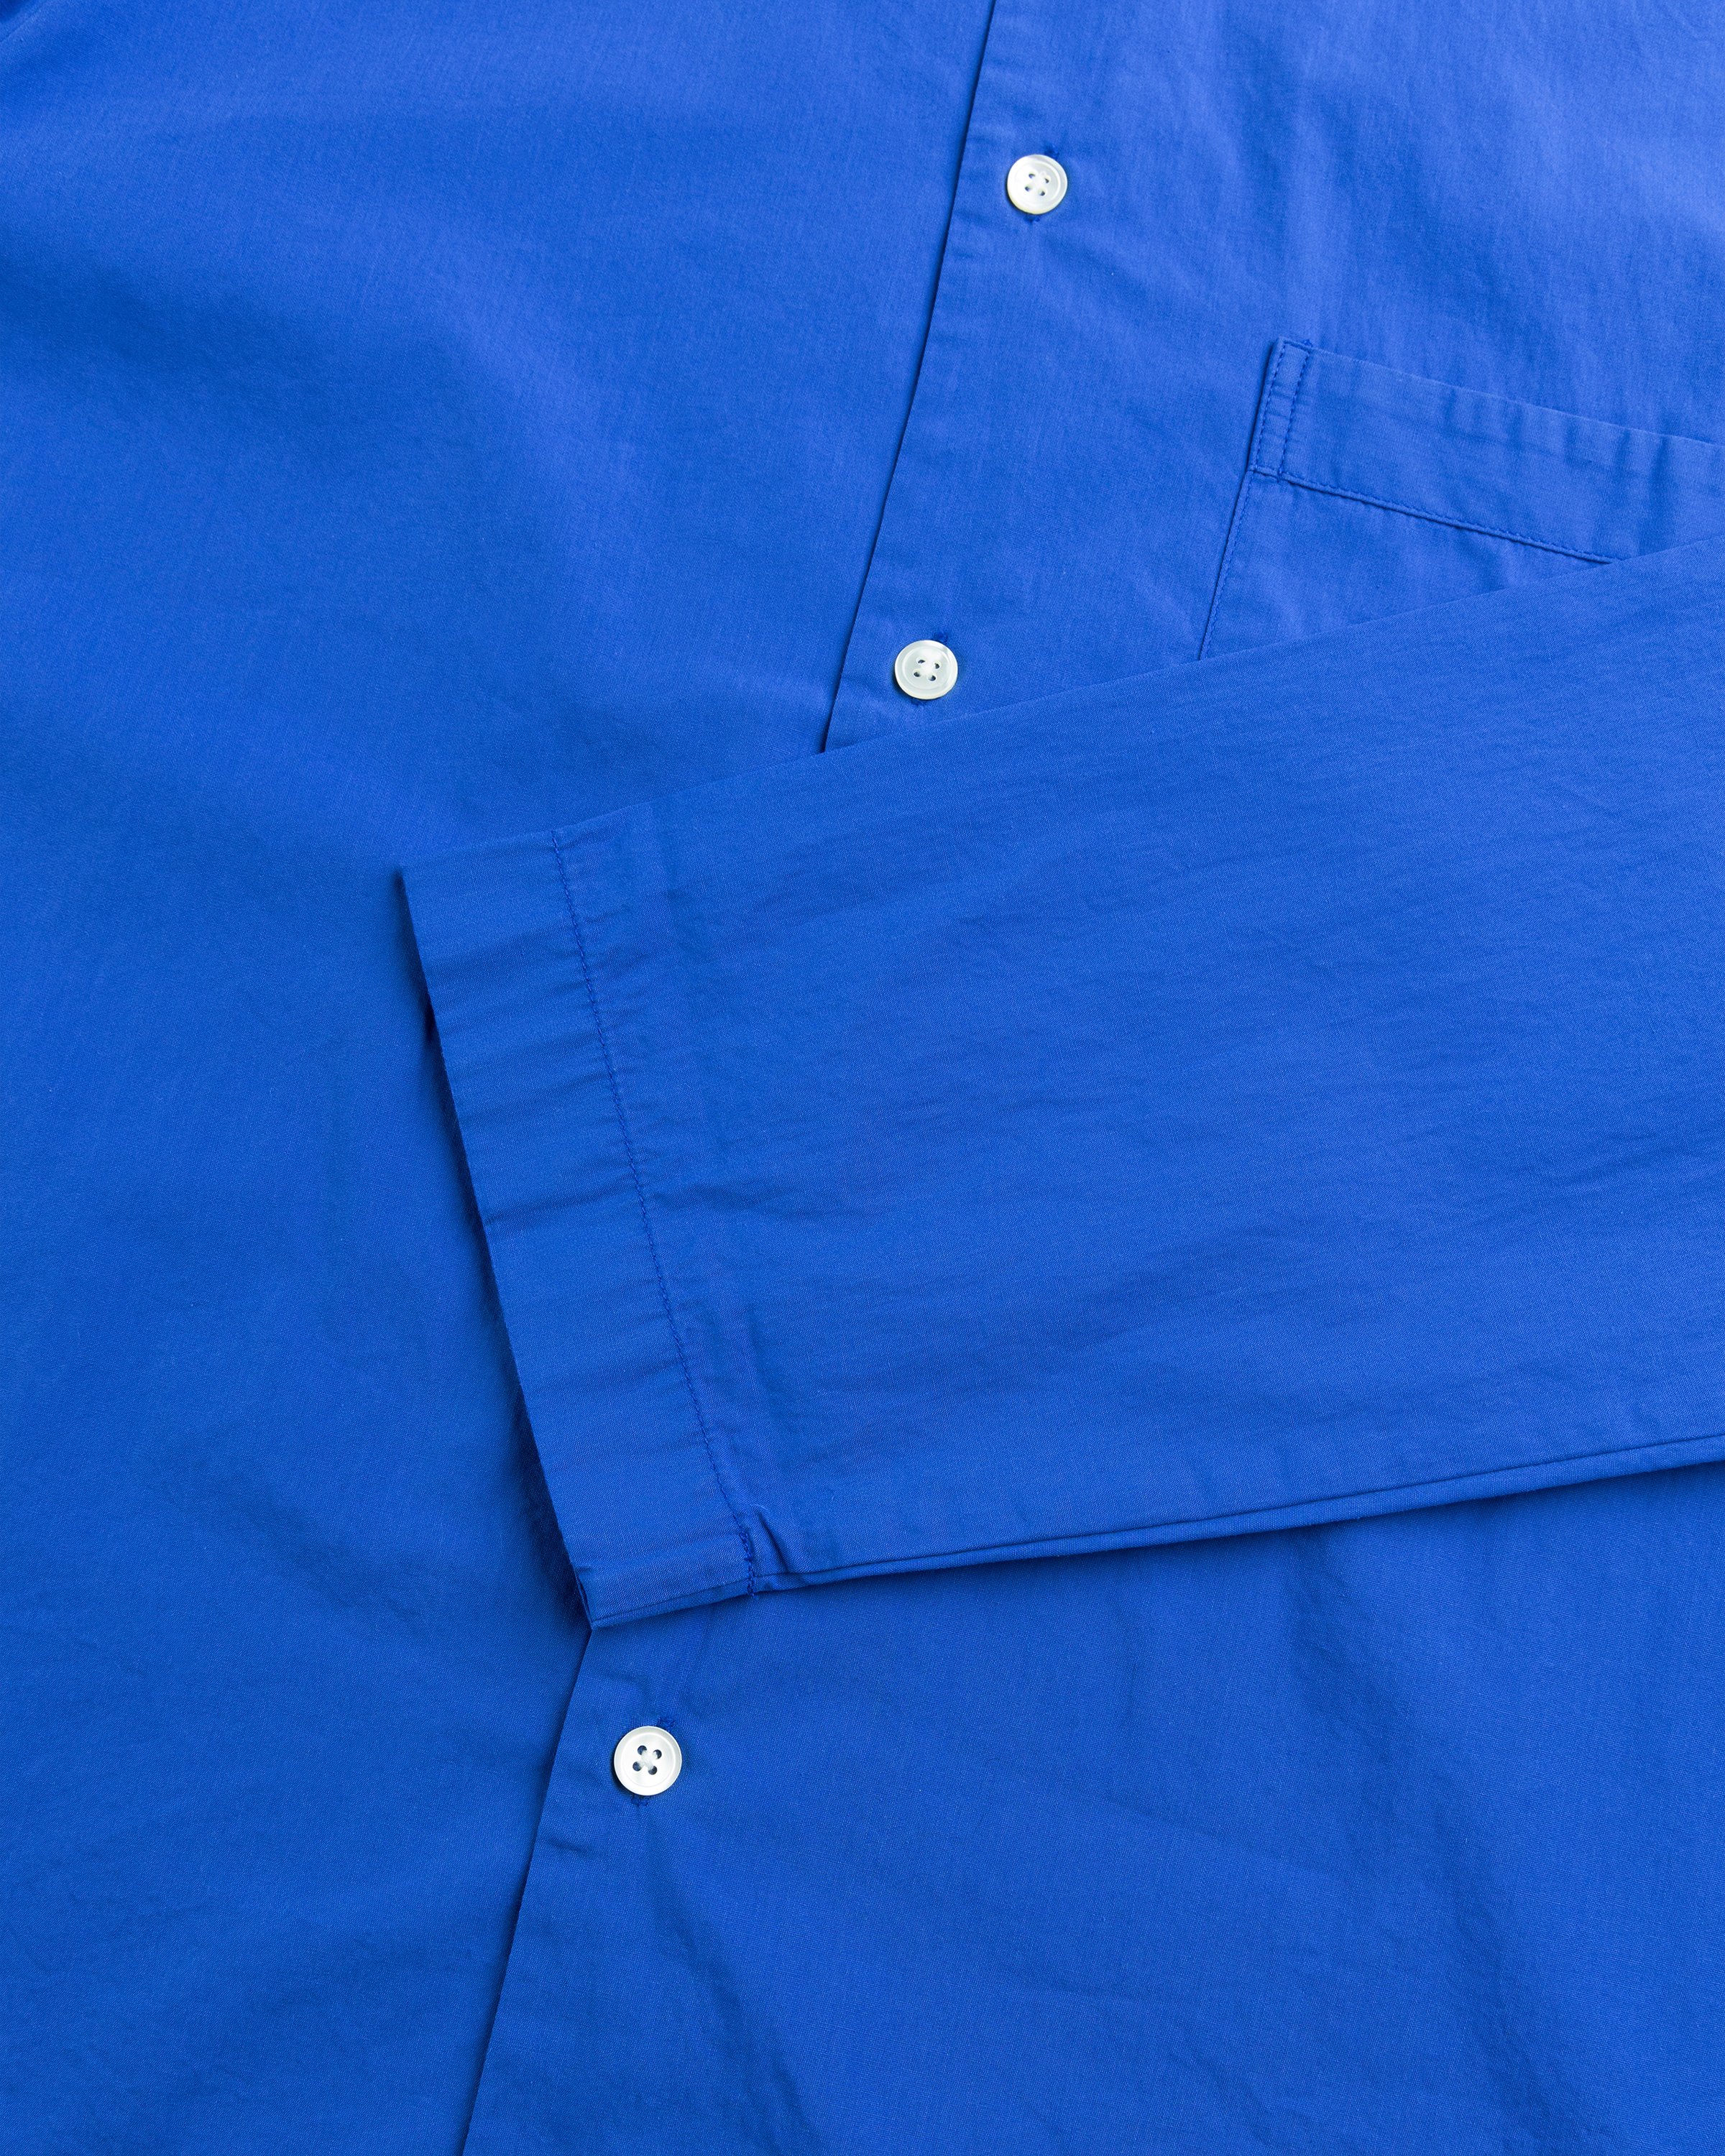 Tekla - Cotton Poplin Pyjamas Shirt Royal Blue - Clothing - Blue - Image 6